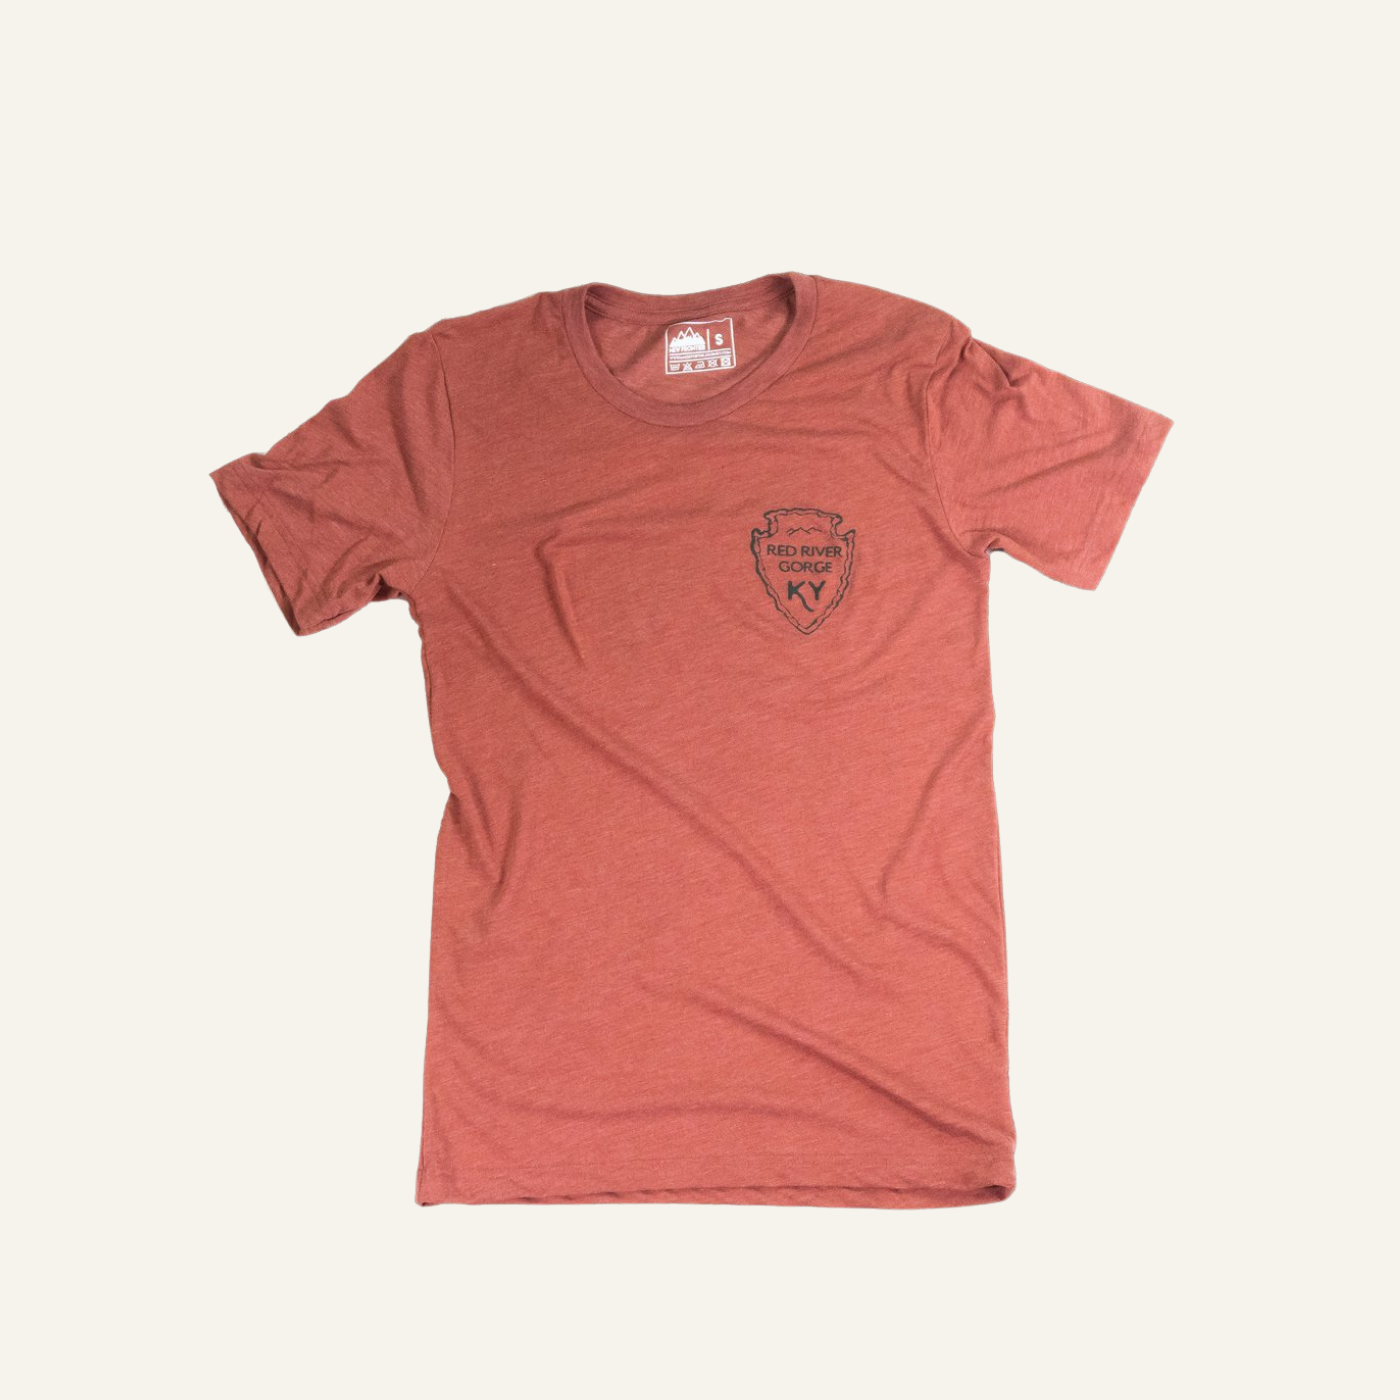 Red River Gorge Kentucky T-Shirt